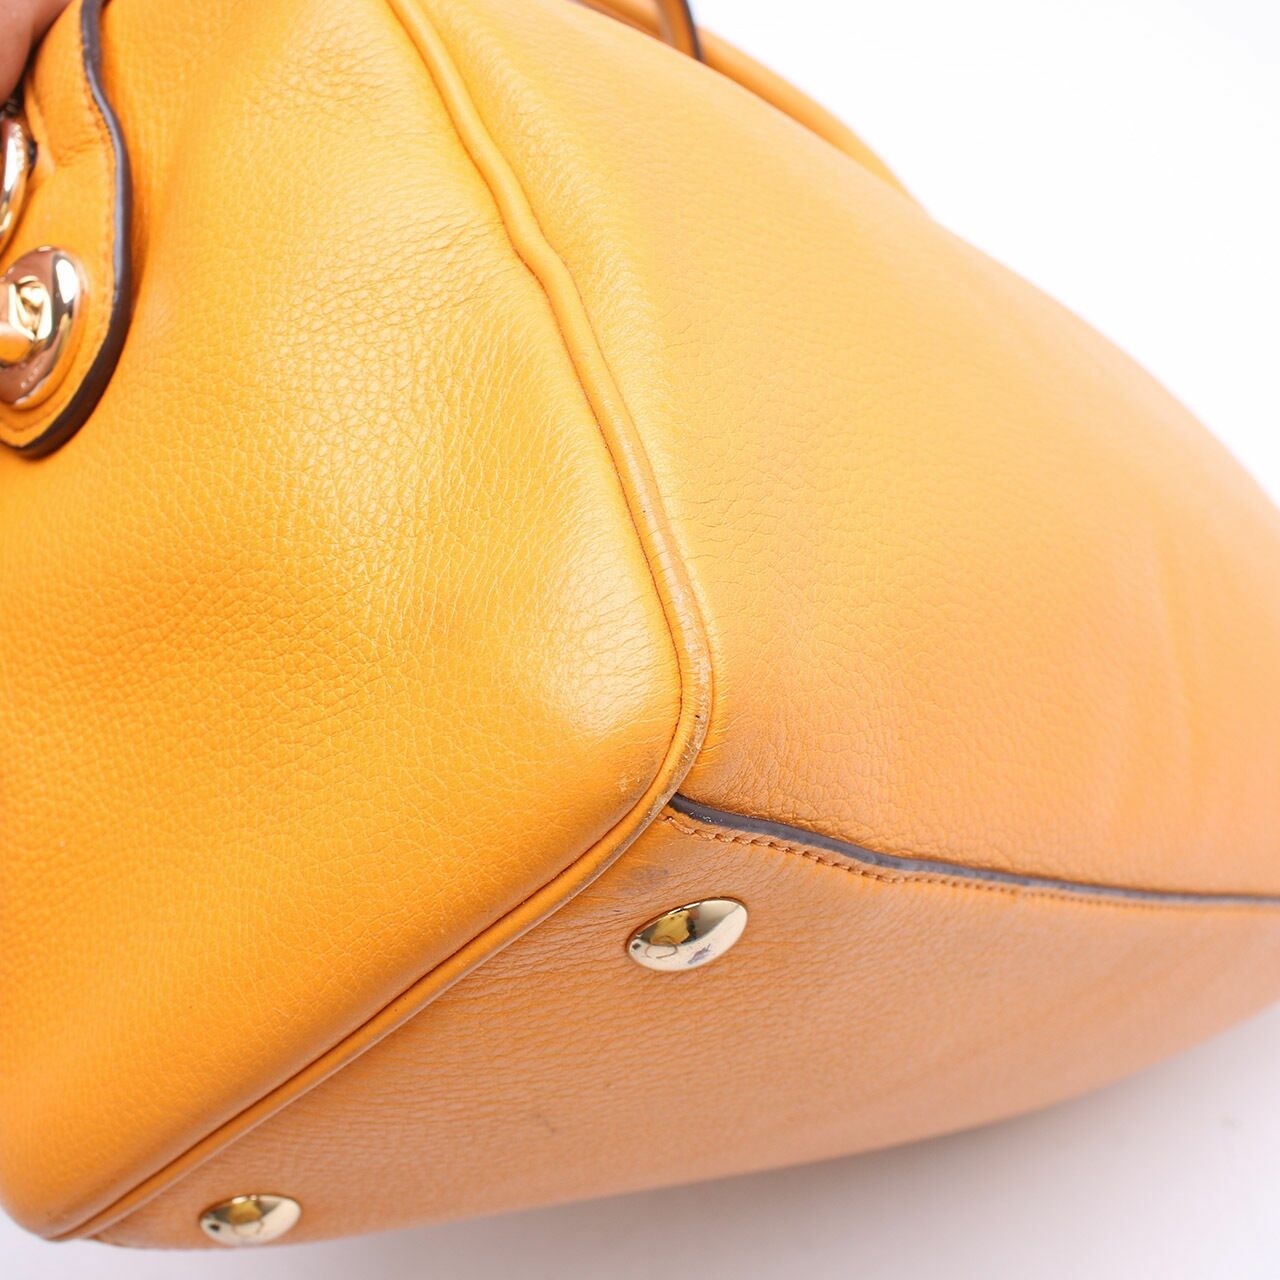 Coach Bennett  Orange Pebbled Leather Handbag  F36672